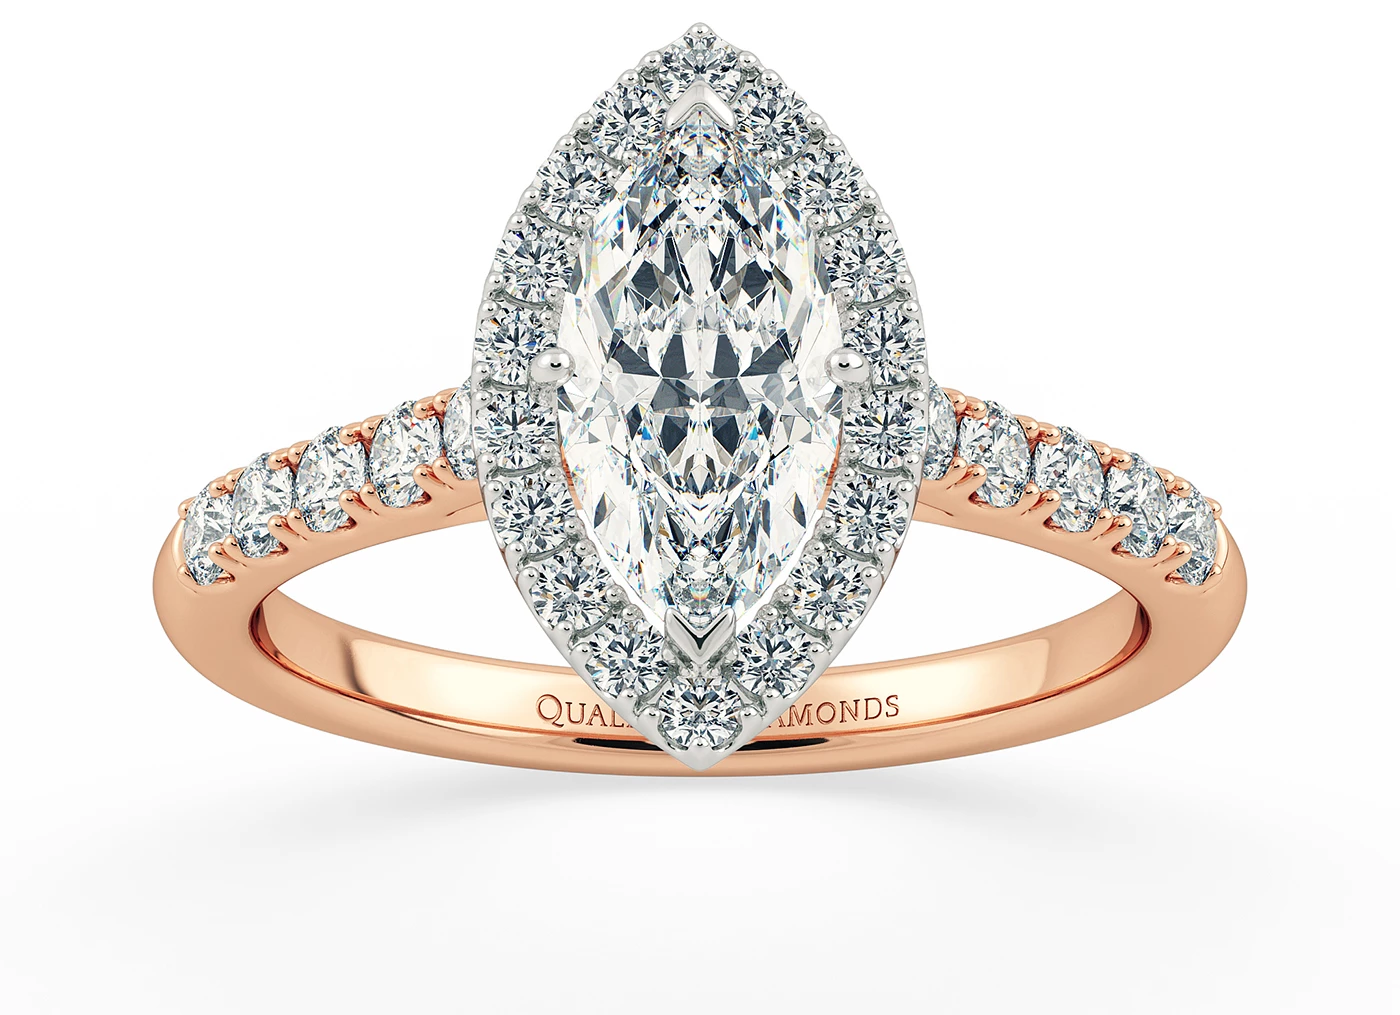 Half Carat Marquise Halo Diamond Ring in 18K Rose Gold